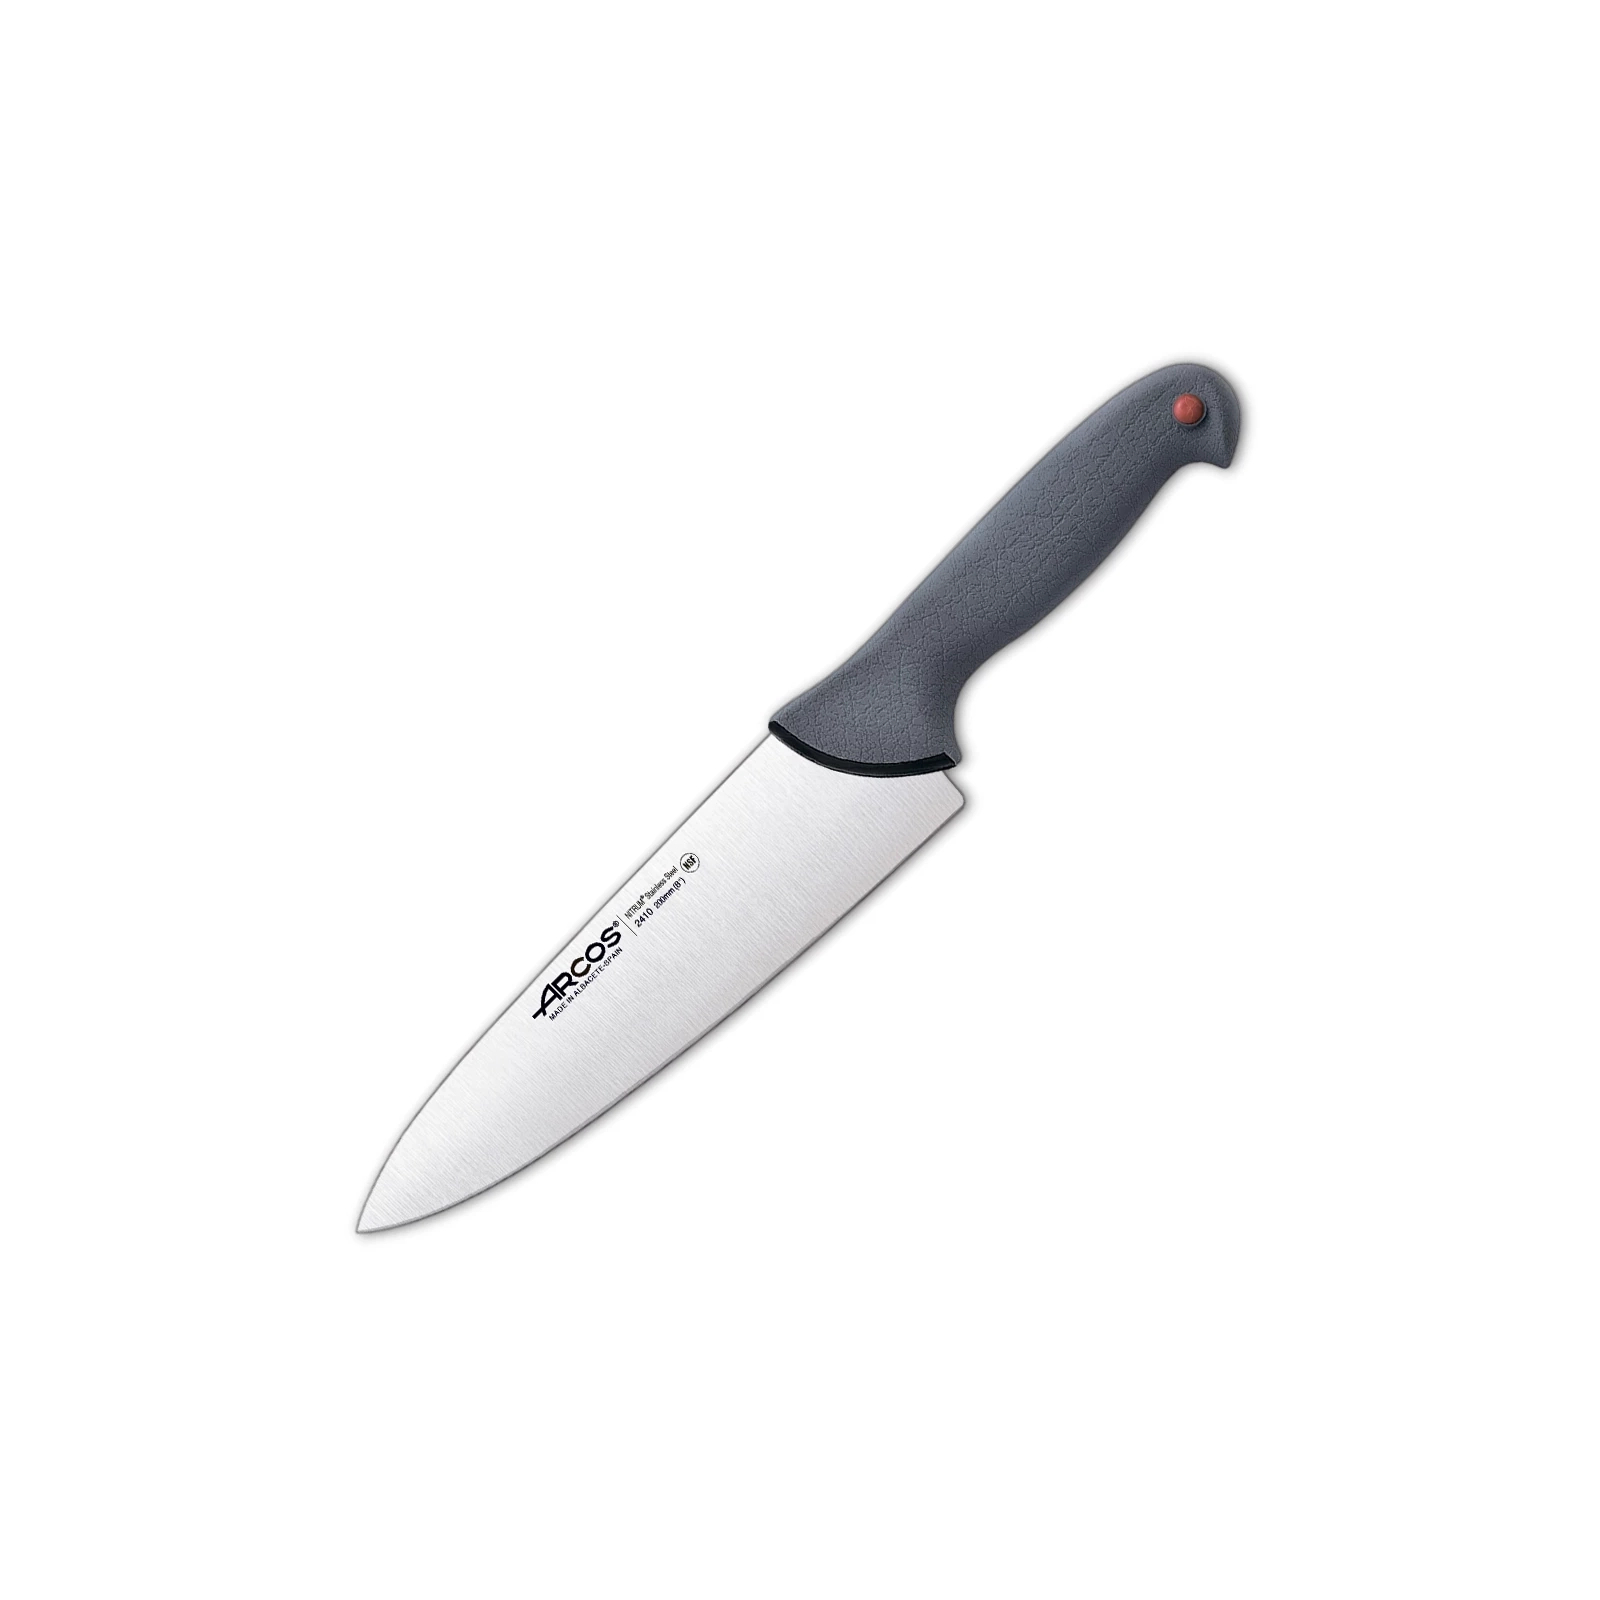 Кухонный нож Arcos Сolour-prof кухарський 200 мм (241000)